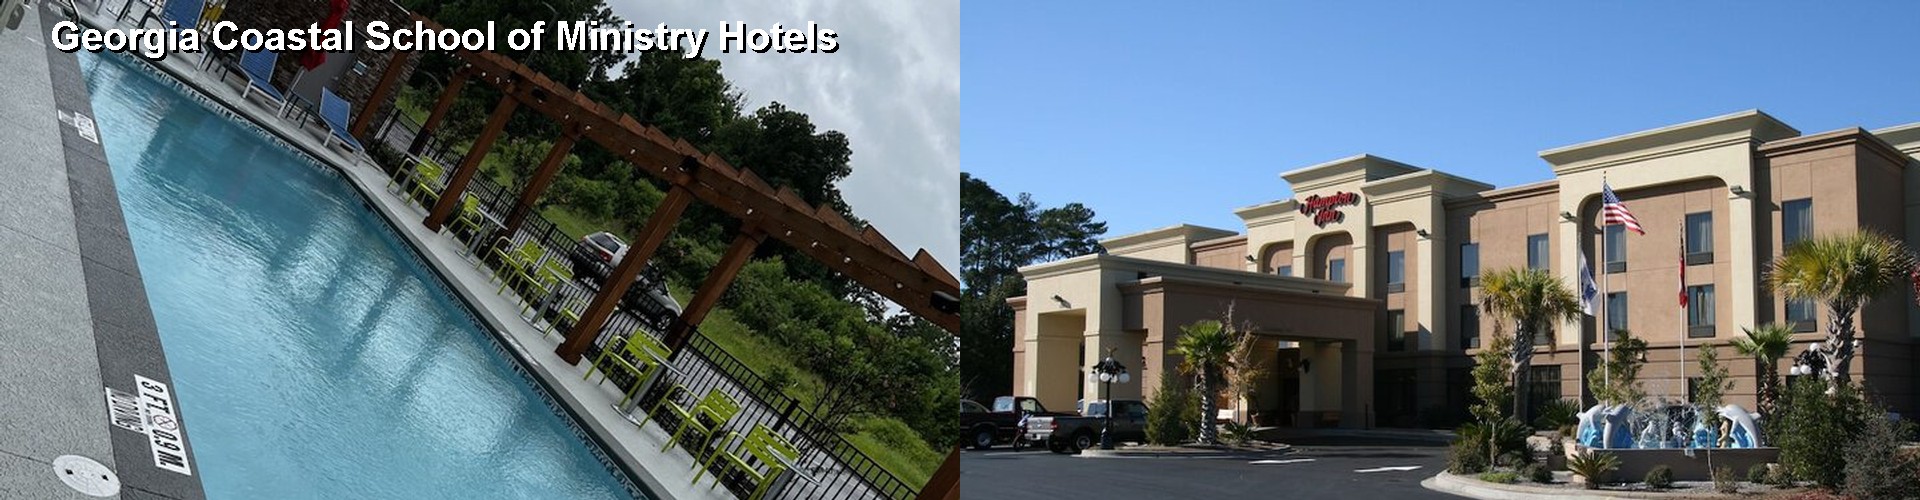 5 Best Hotels near Georgia Coastal School of Ministry